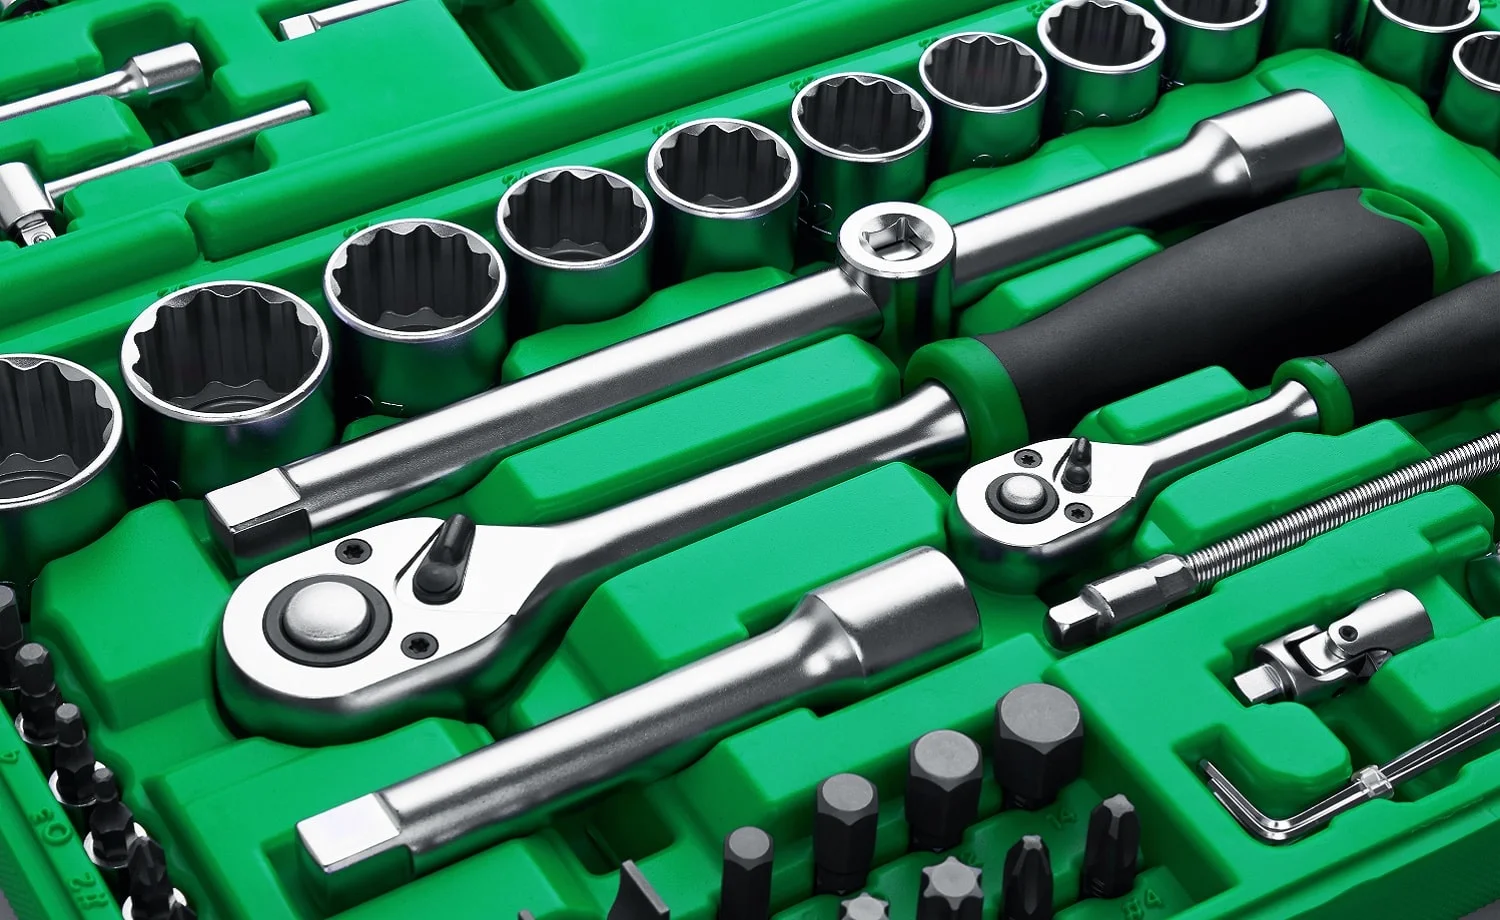 Many Tools in tool box, closeup